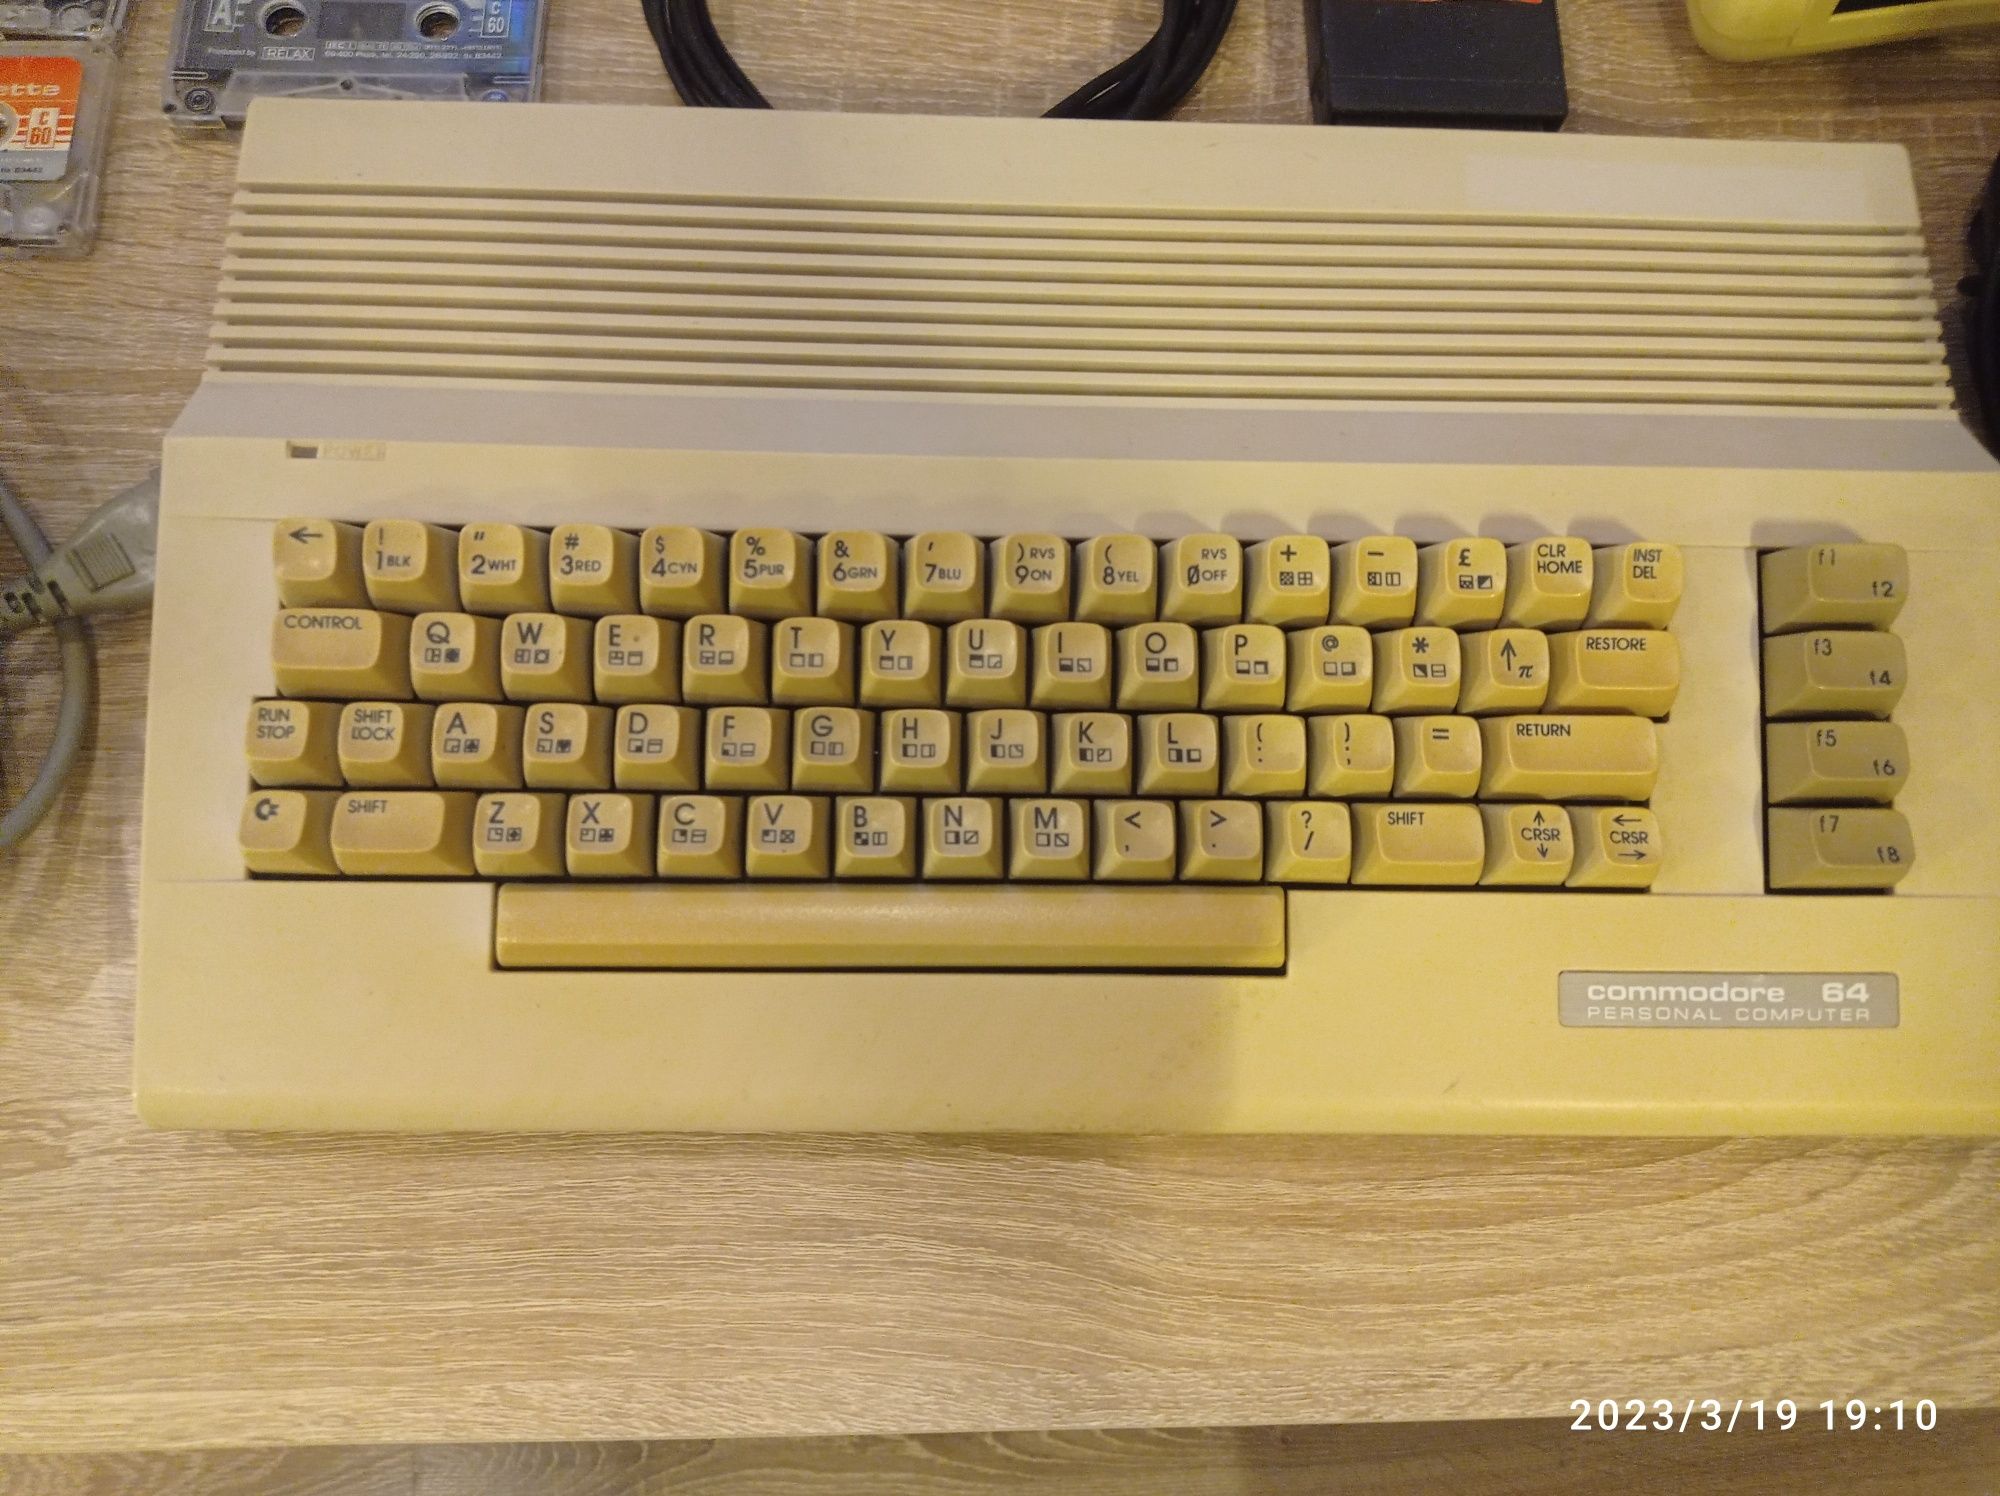 Komputer Commodore C 64 sprawny